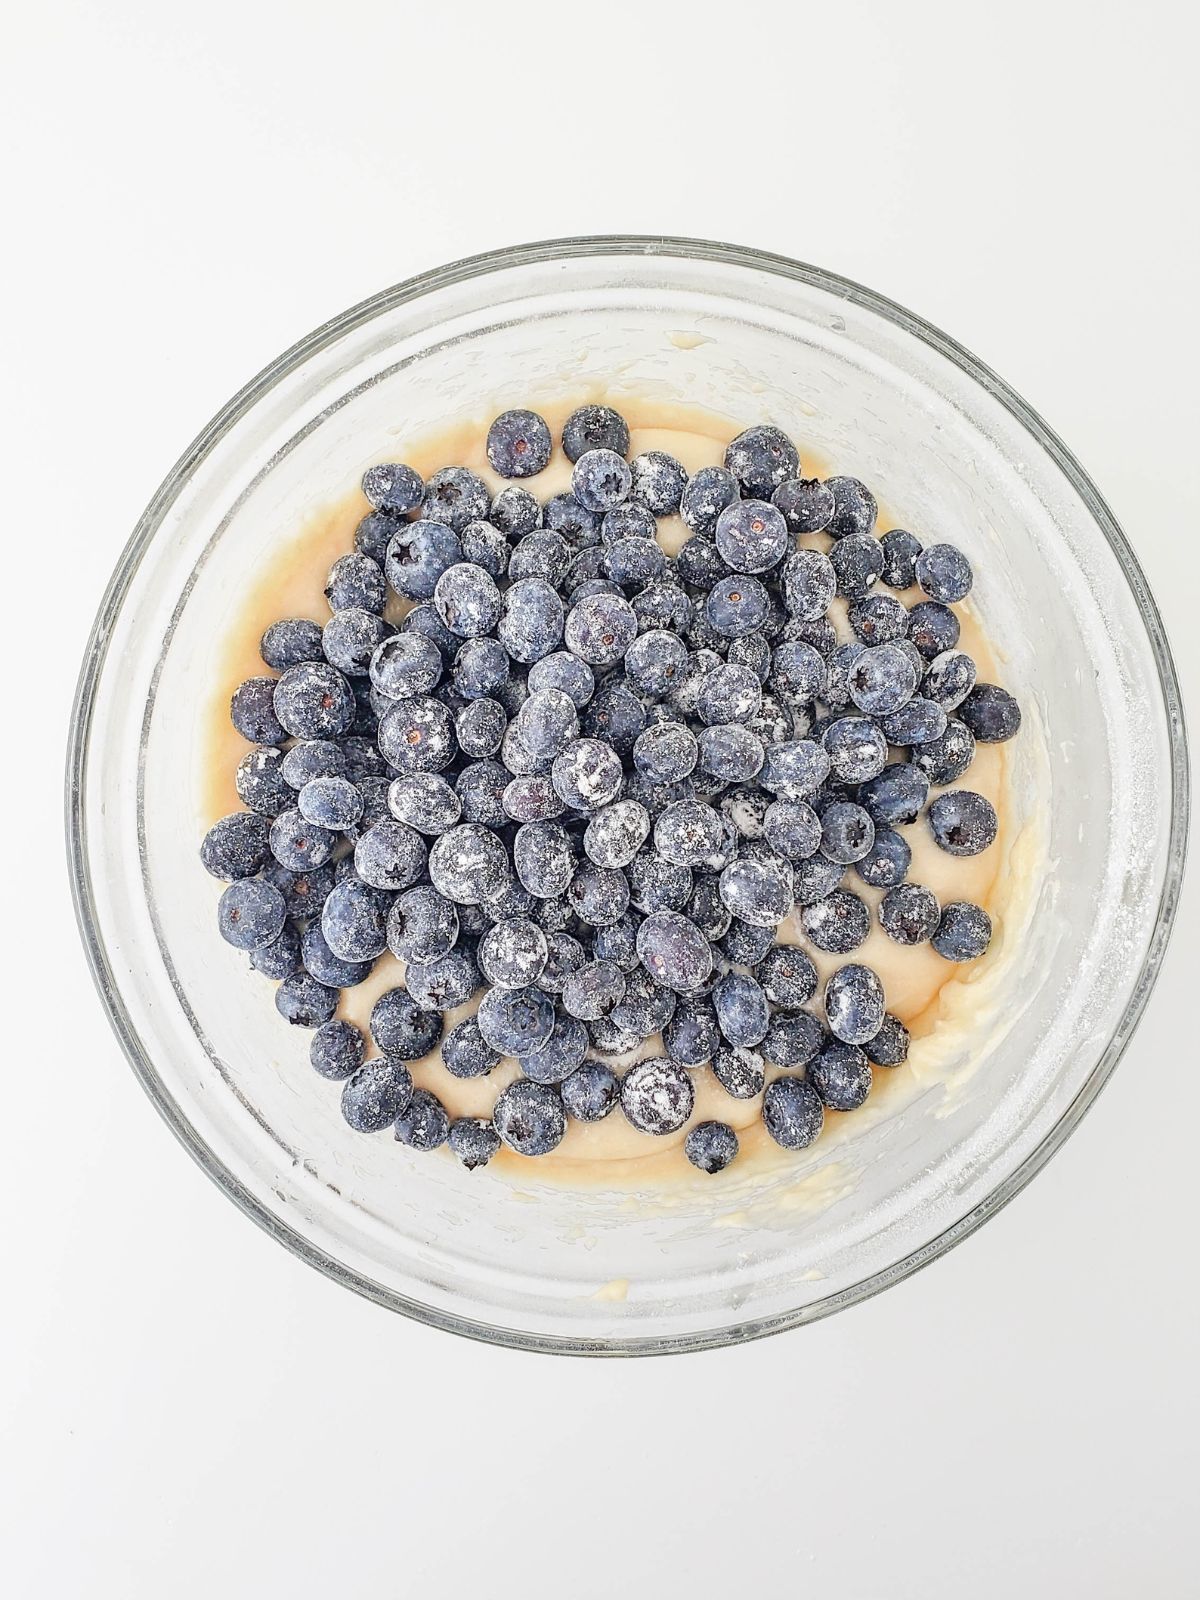 fresh blueberries in muffin batter.